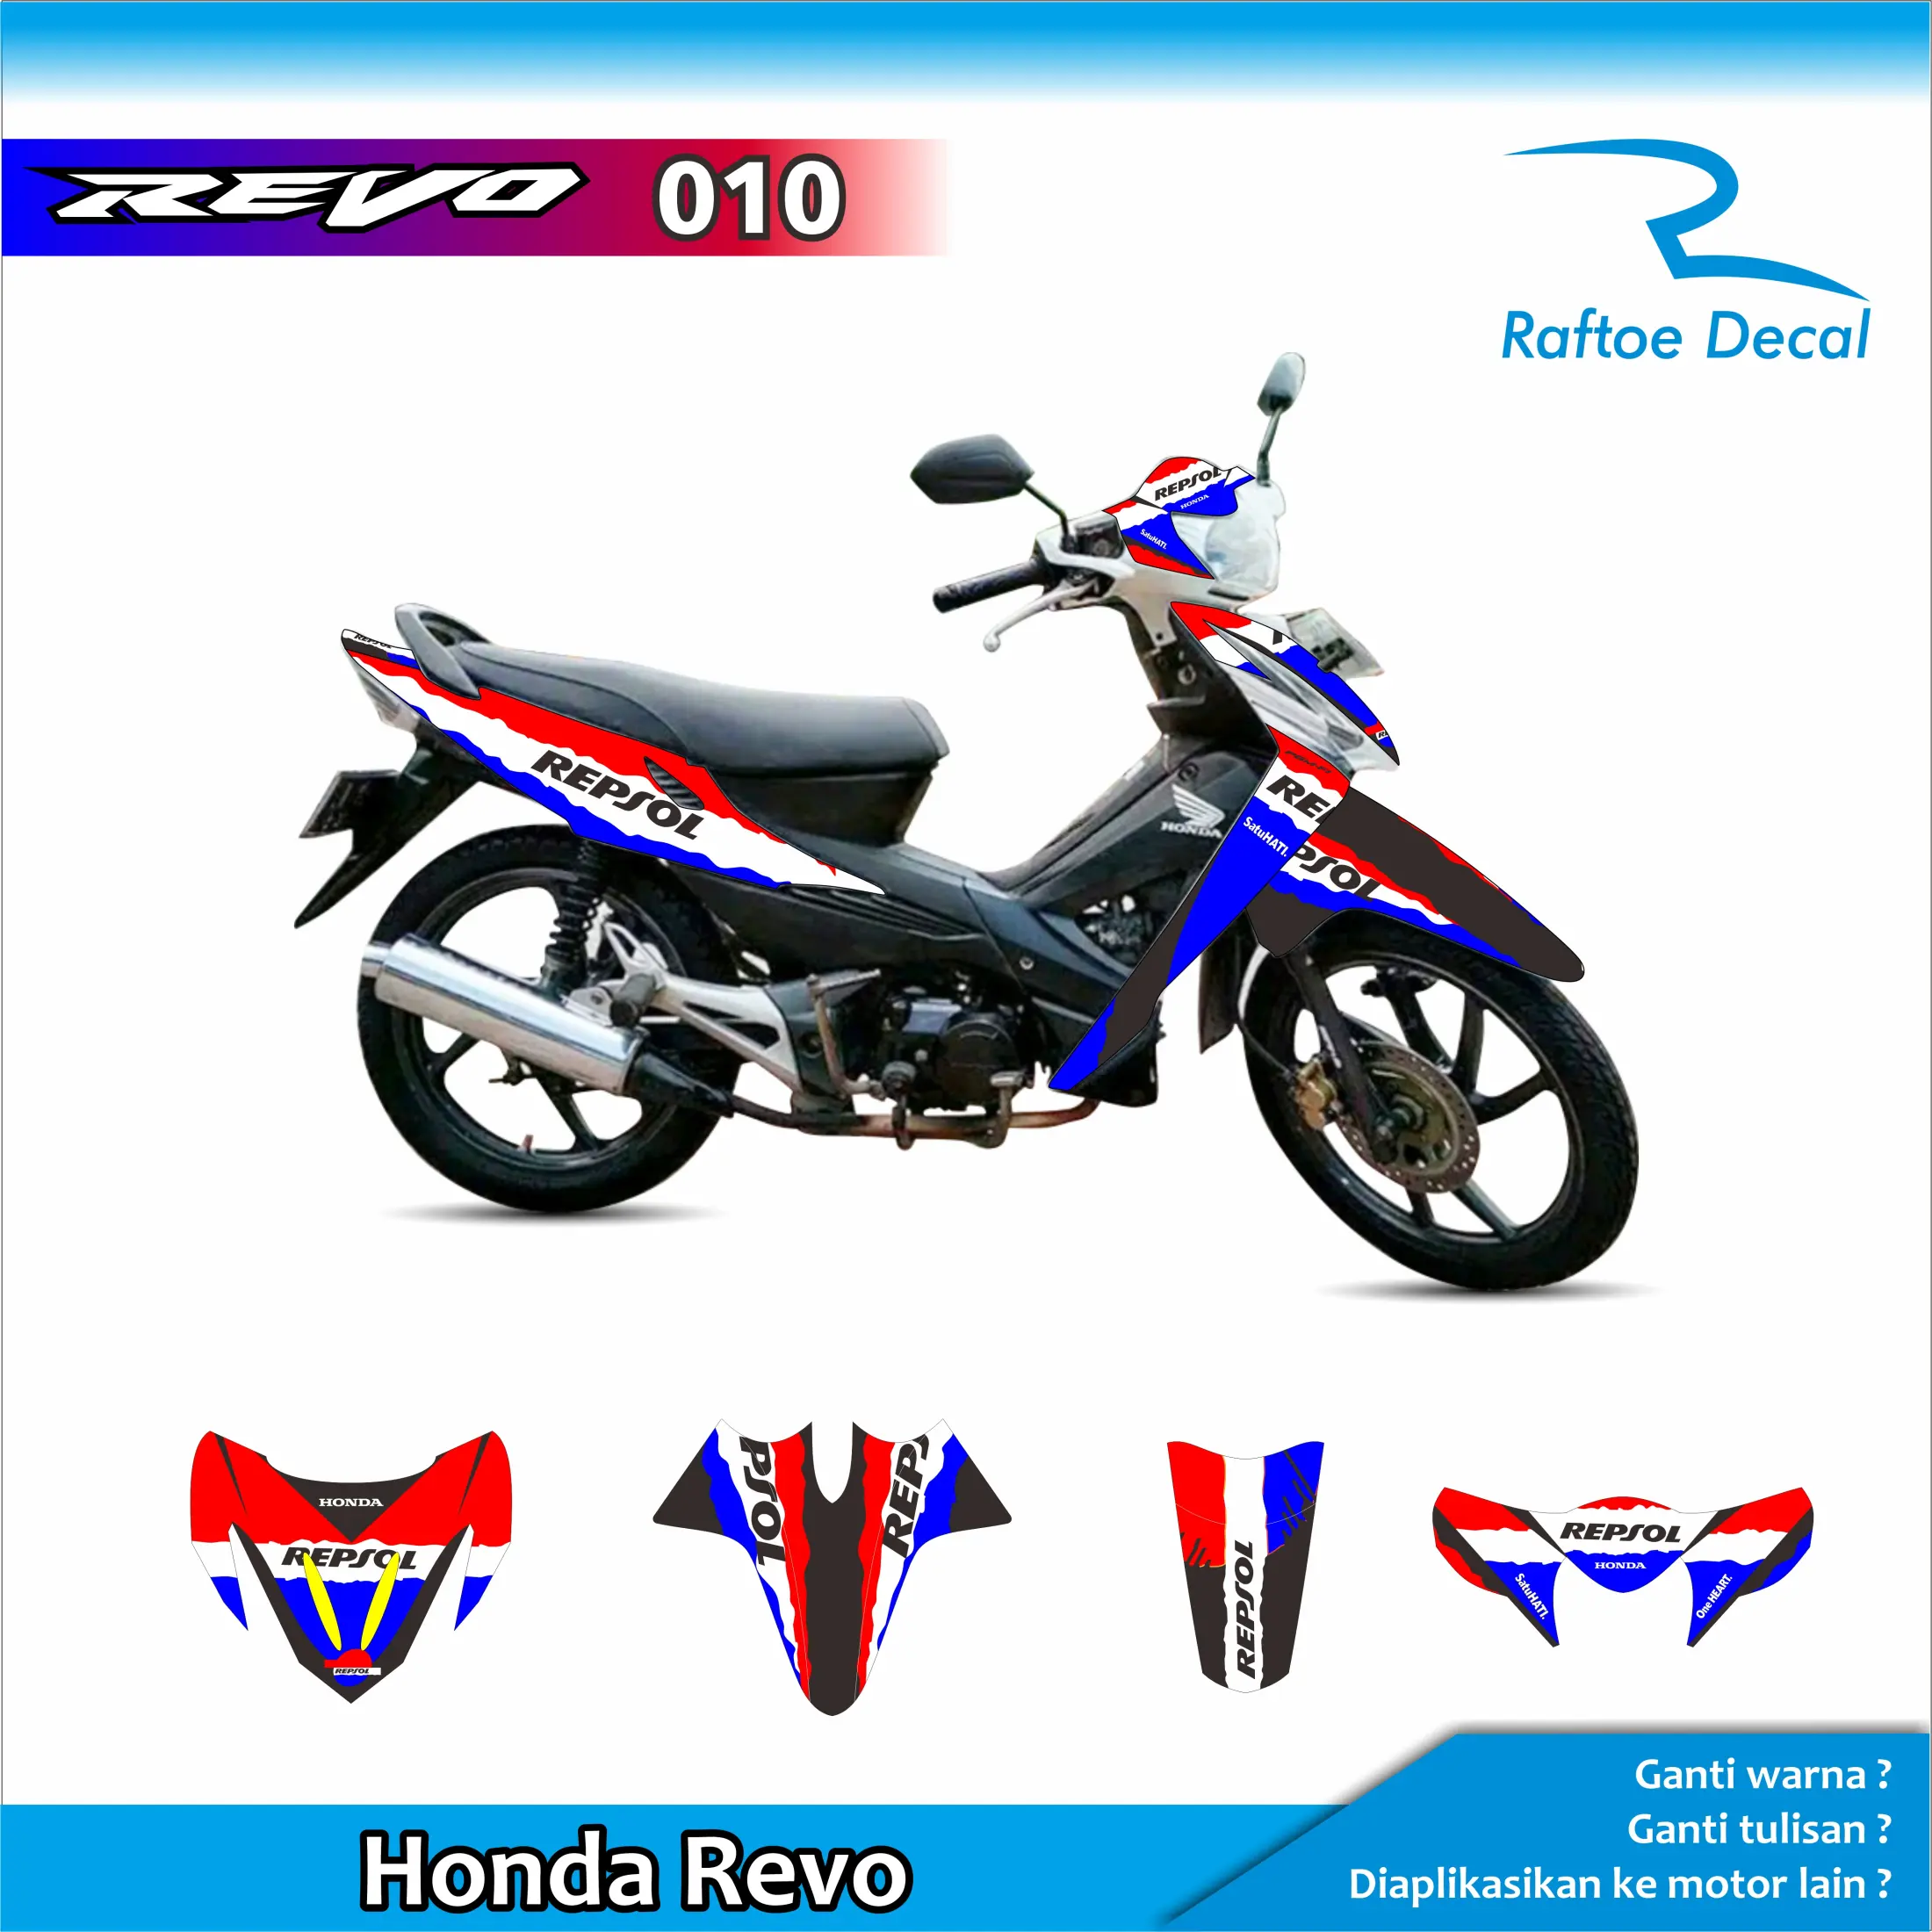 Decal Sticker Honda Revo 100cc Full Body Full Blok RV010 Netherland Style Lazada Indonesia